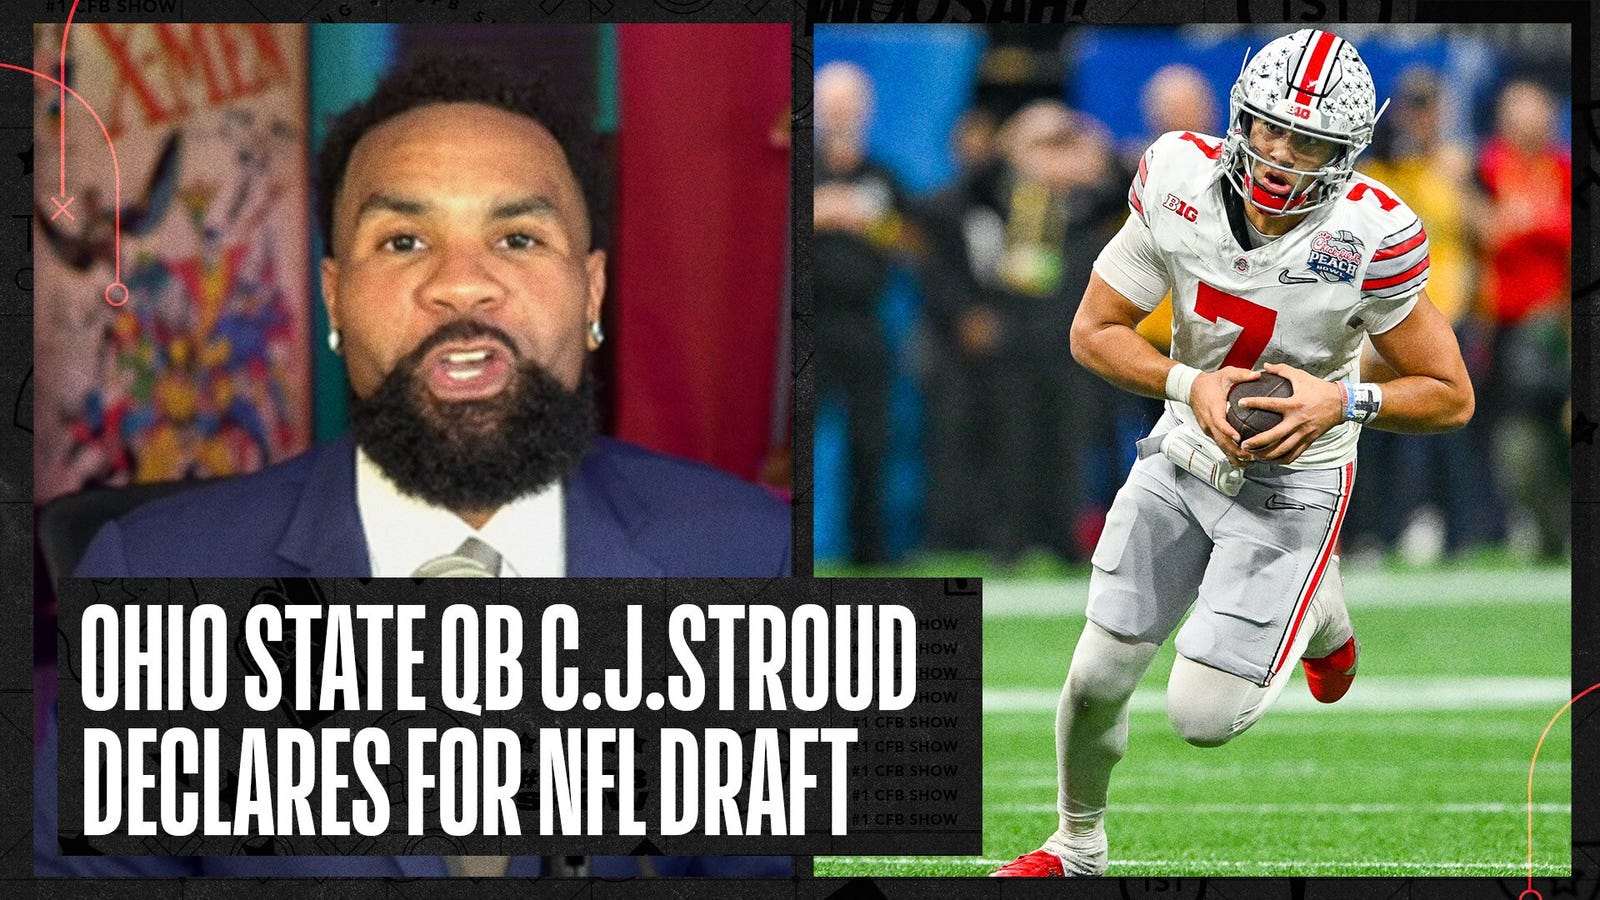 C.J. Stroud declares for NFL Draft